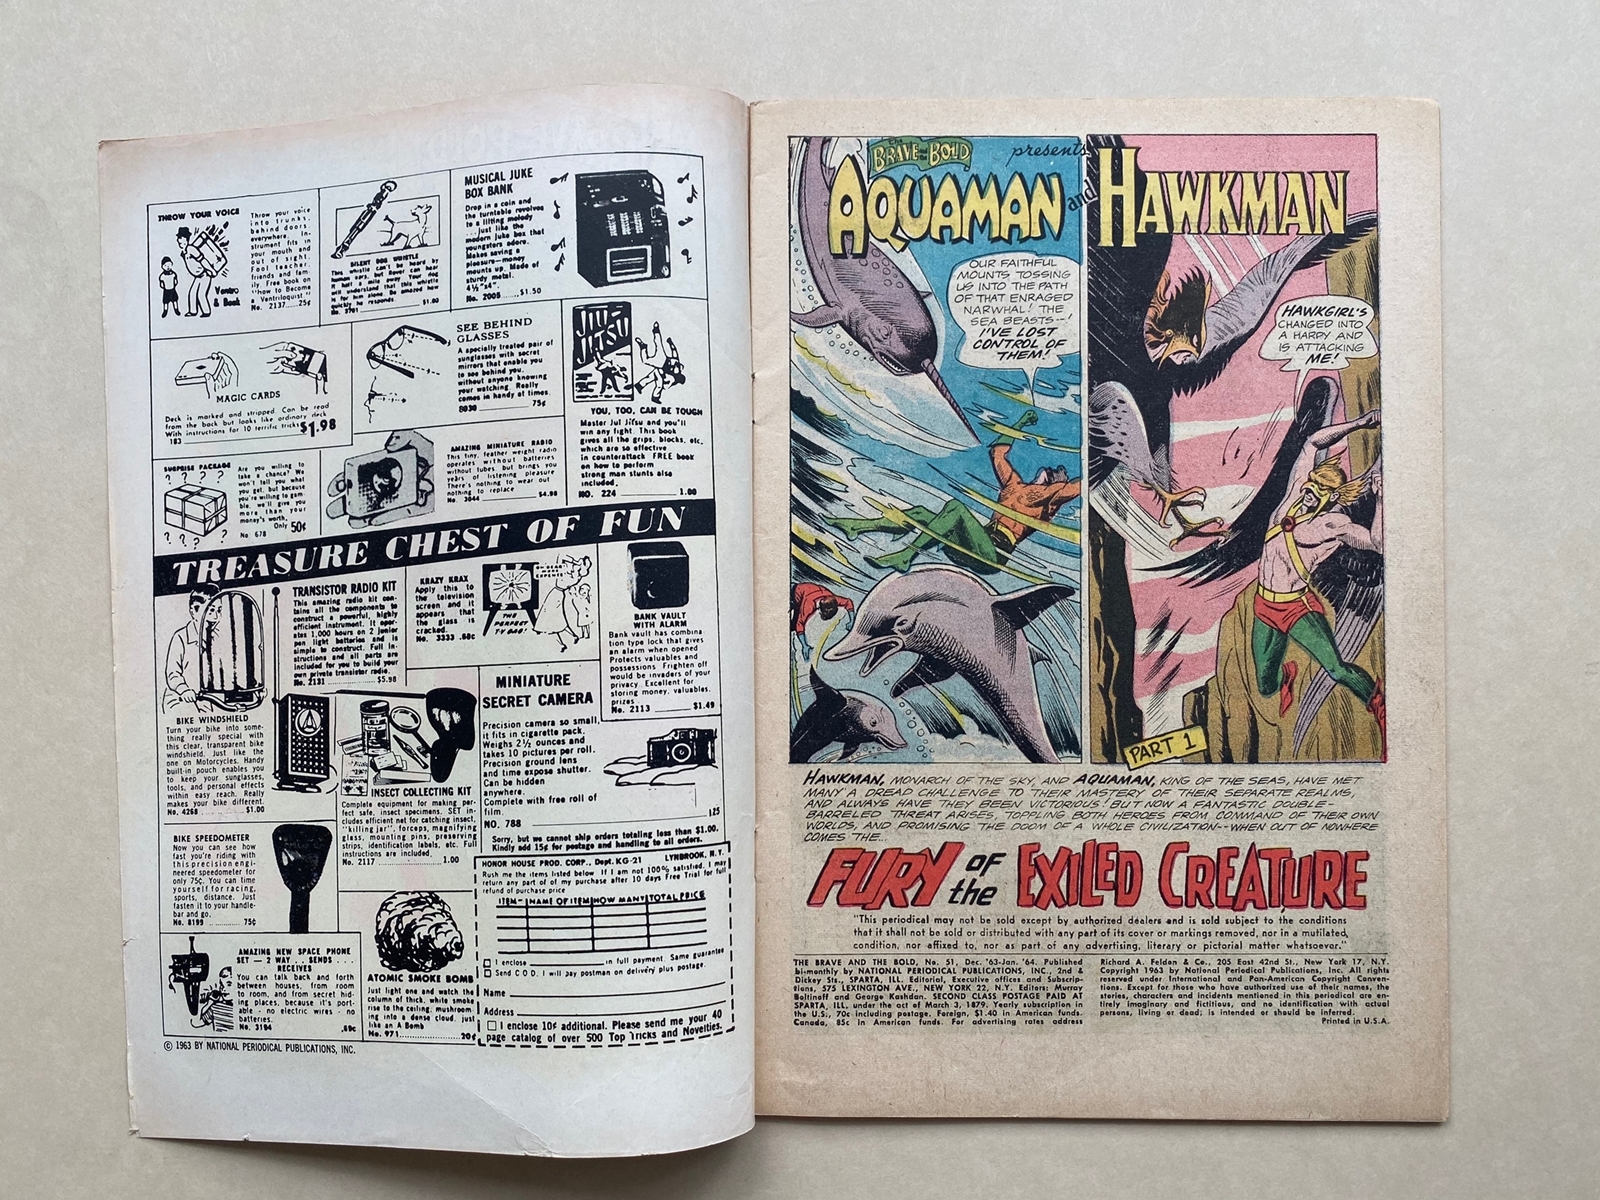 BRAVE & BOLD #51 - AQUAMAN & HAWKMAN - (1964 - DC) FN/VFN (Cents Copy) - Pre-dates Hawkman #1 - - Image 6 of 10